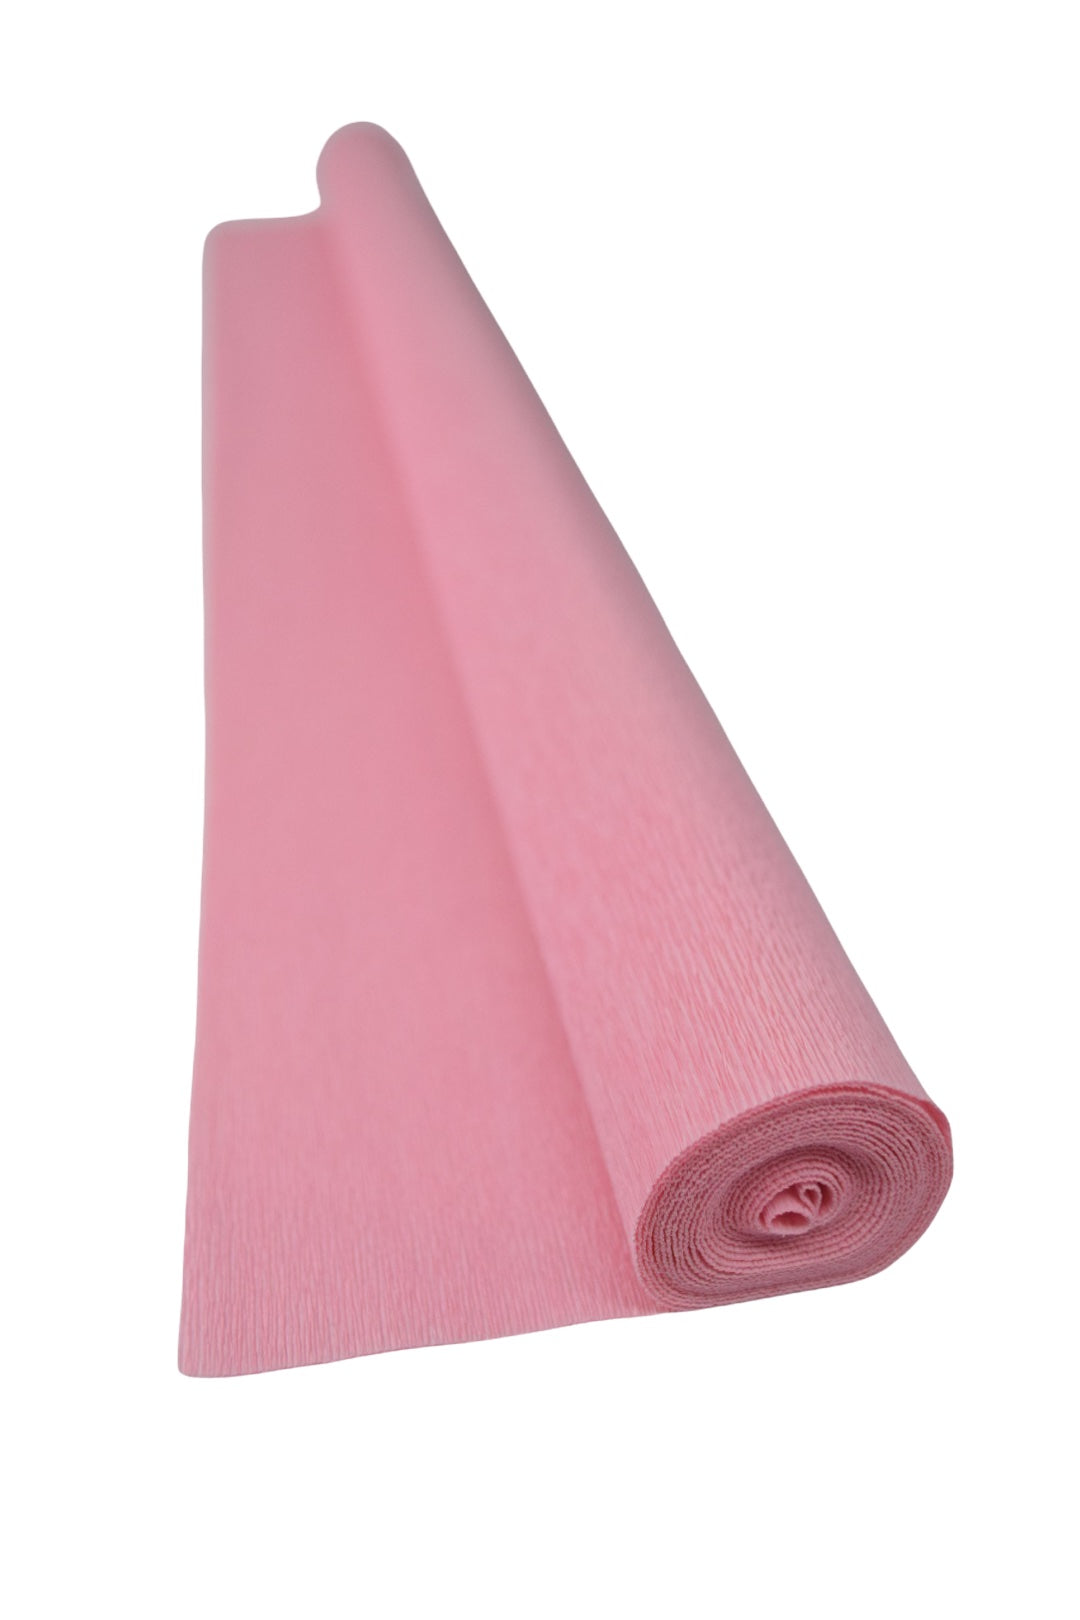 Rare Vintage Dennison Pink Crepe Paper Folds in Original Pac